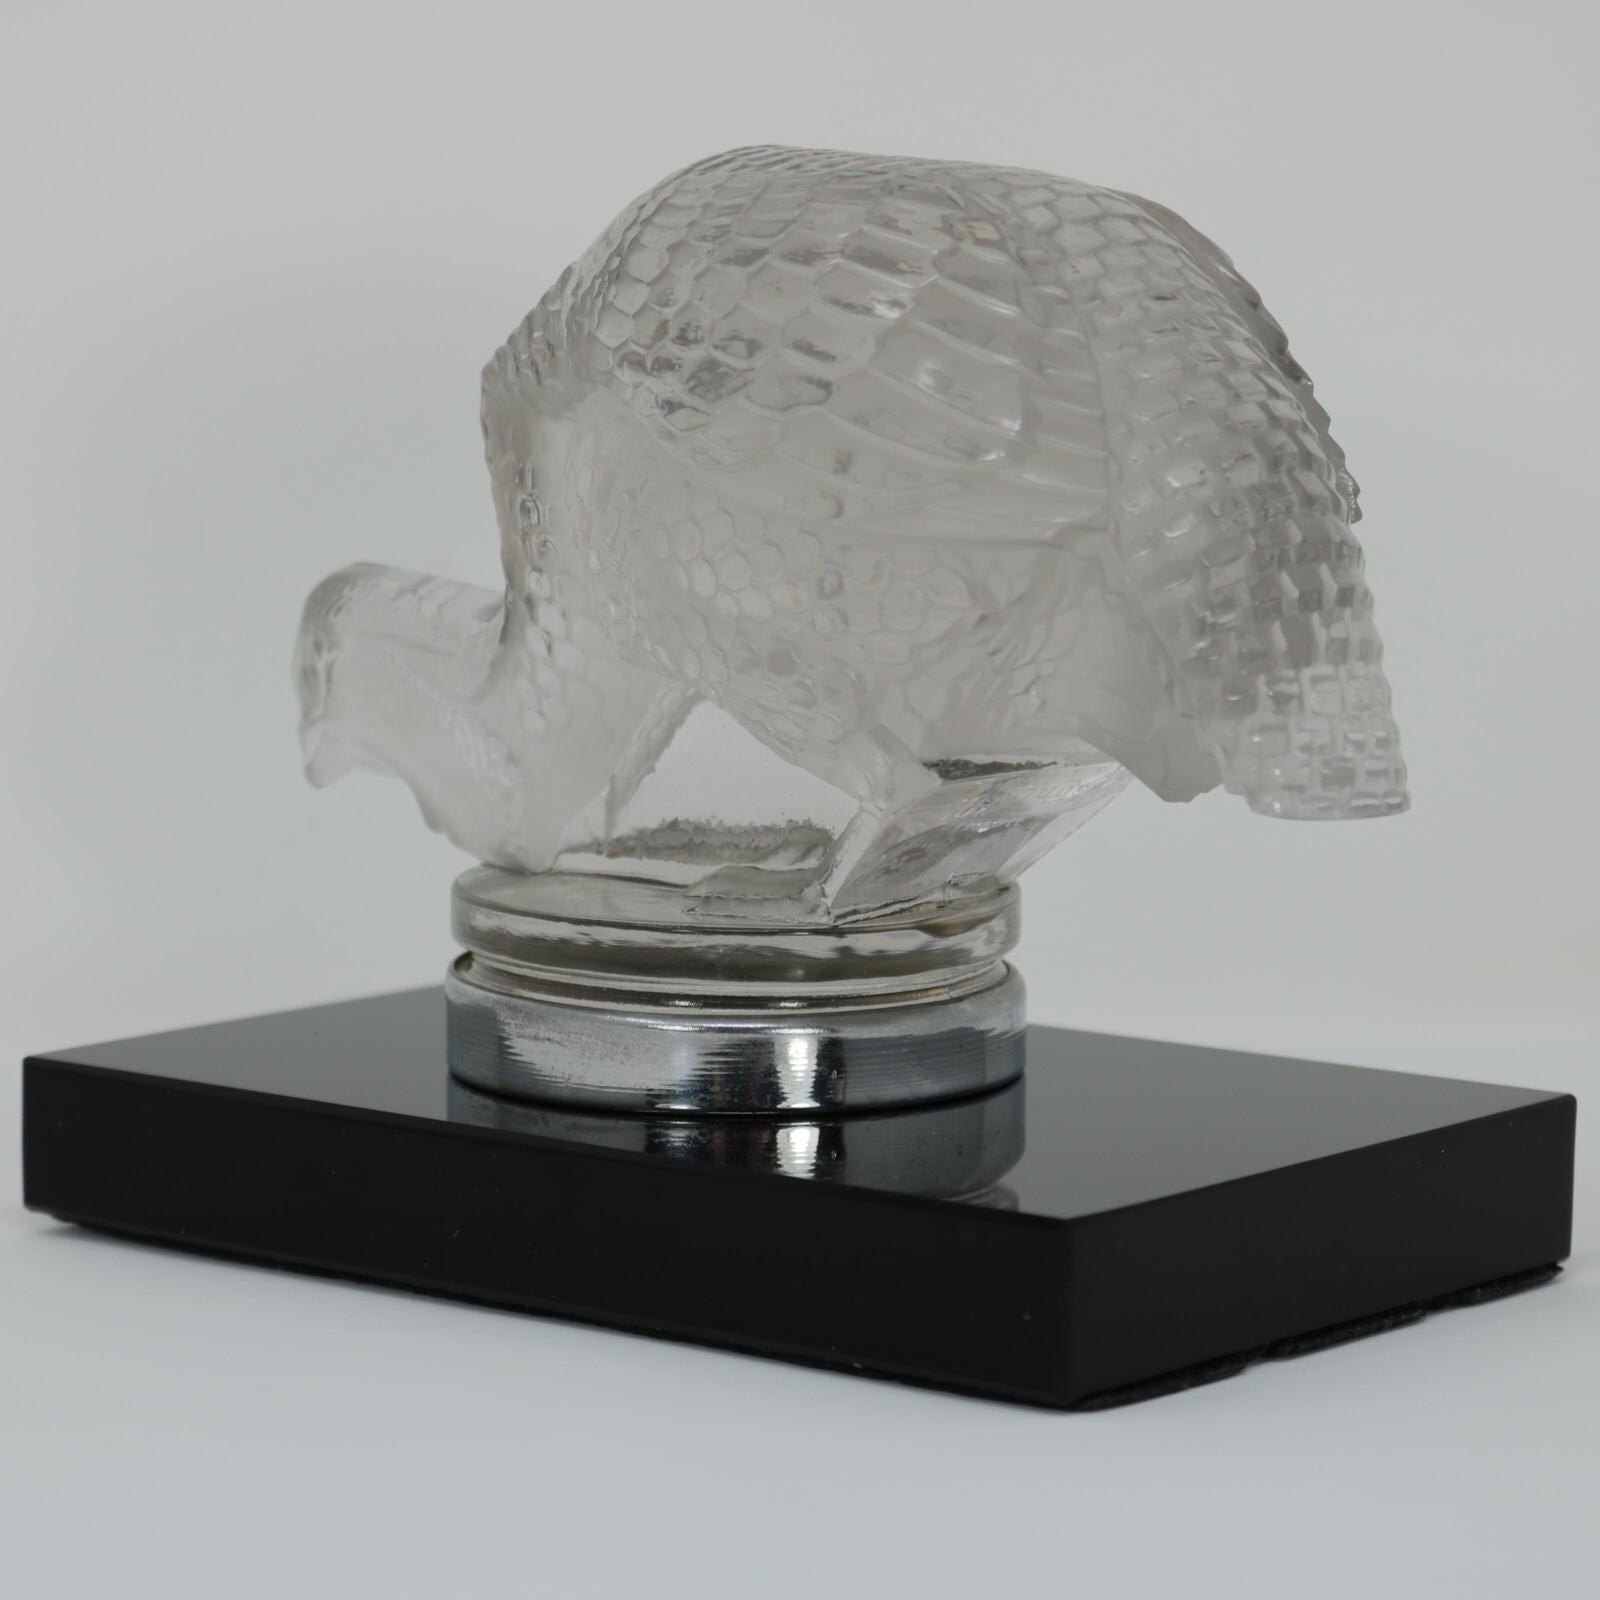 Pressed René Lalique Glass 'Pintade' Guinea Fowl Car Mascot For Sale